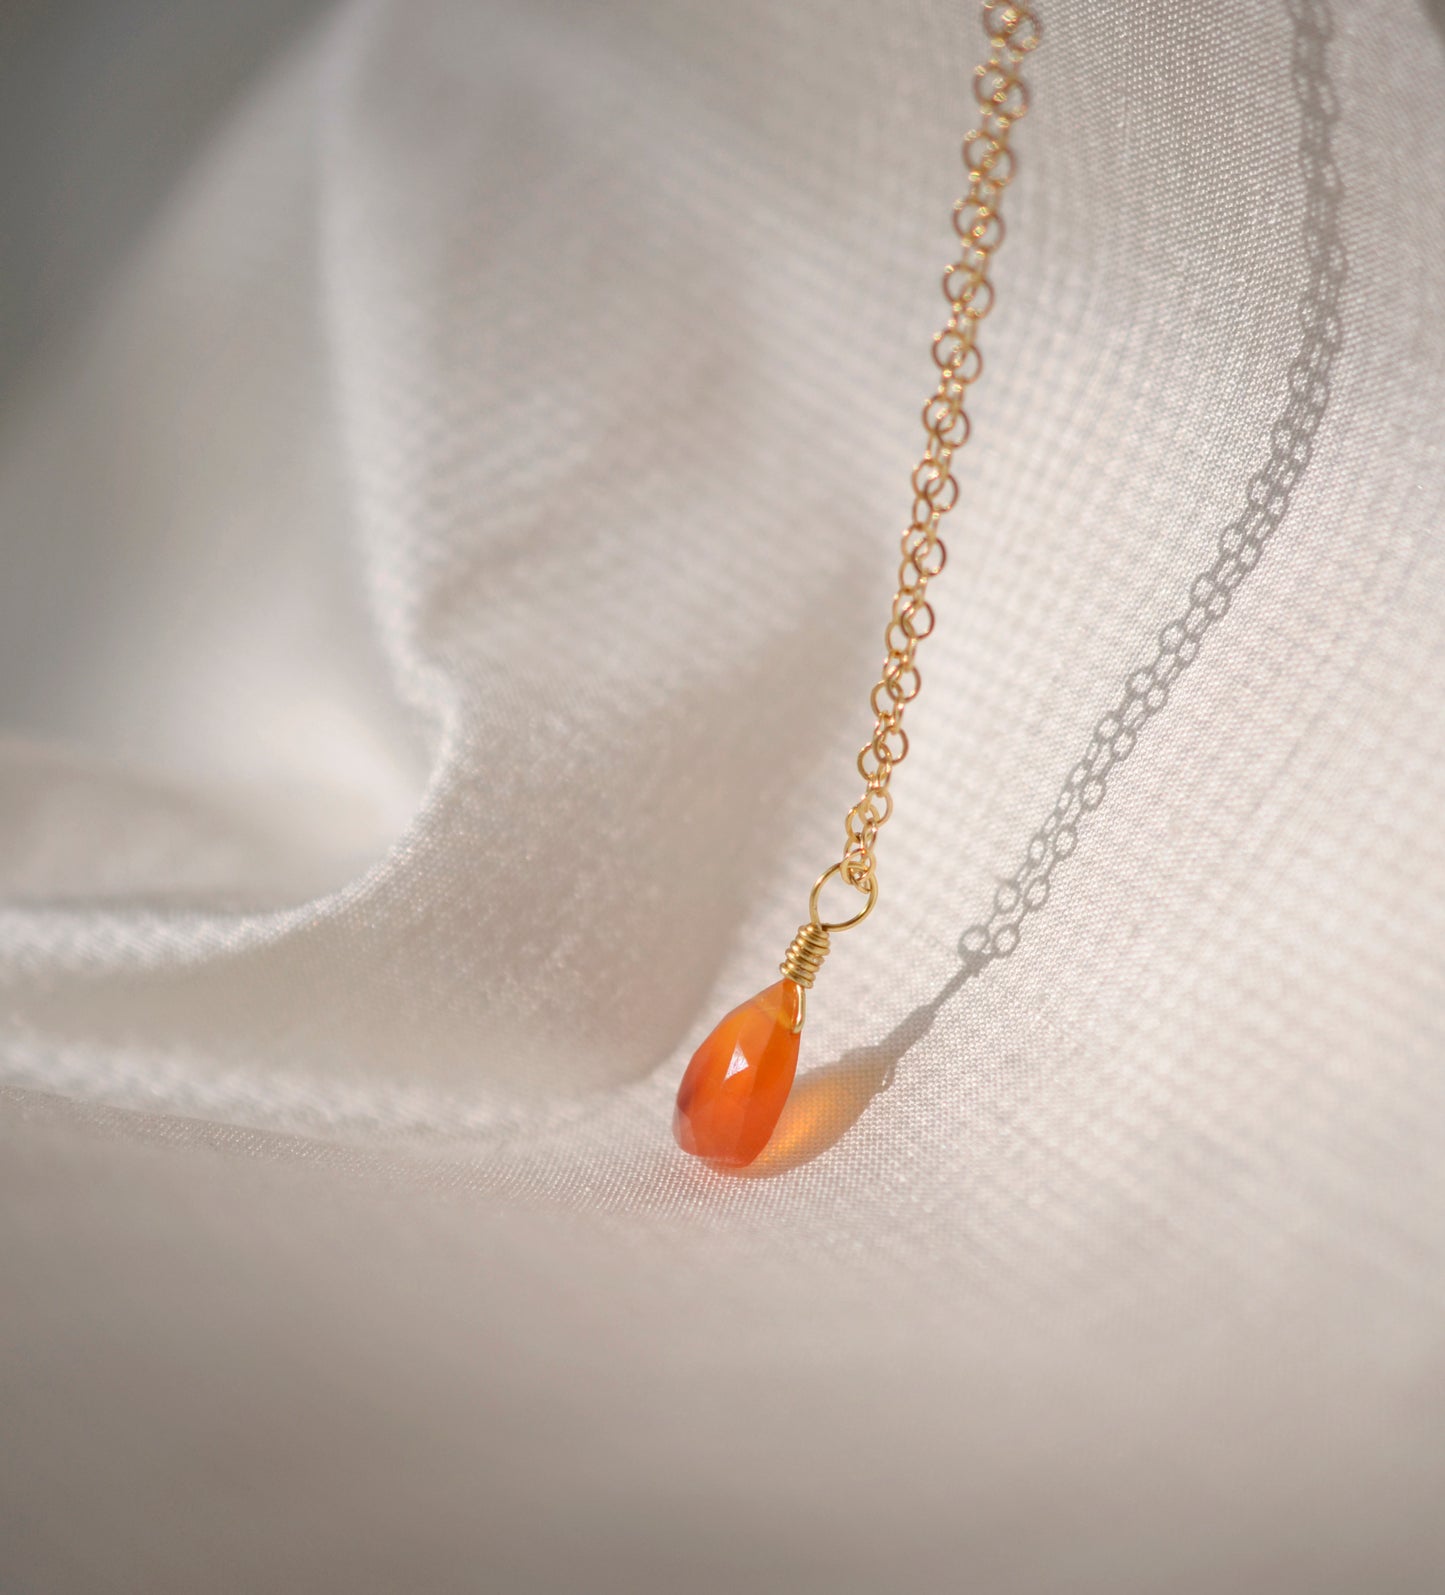 Natural orange triangular shaped Carnelian gemstone set onto a gold chain. Side view.